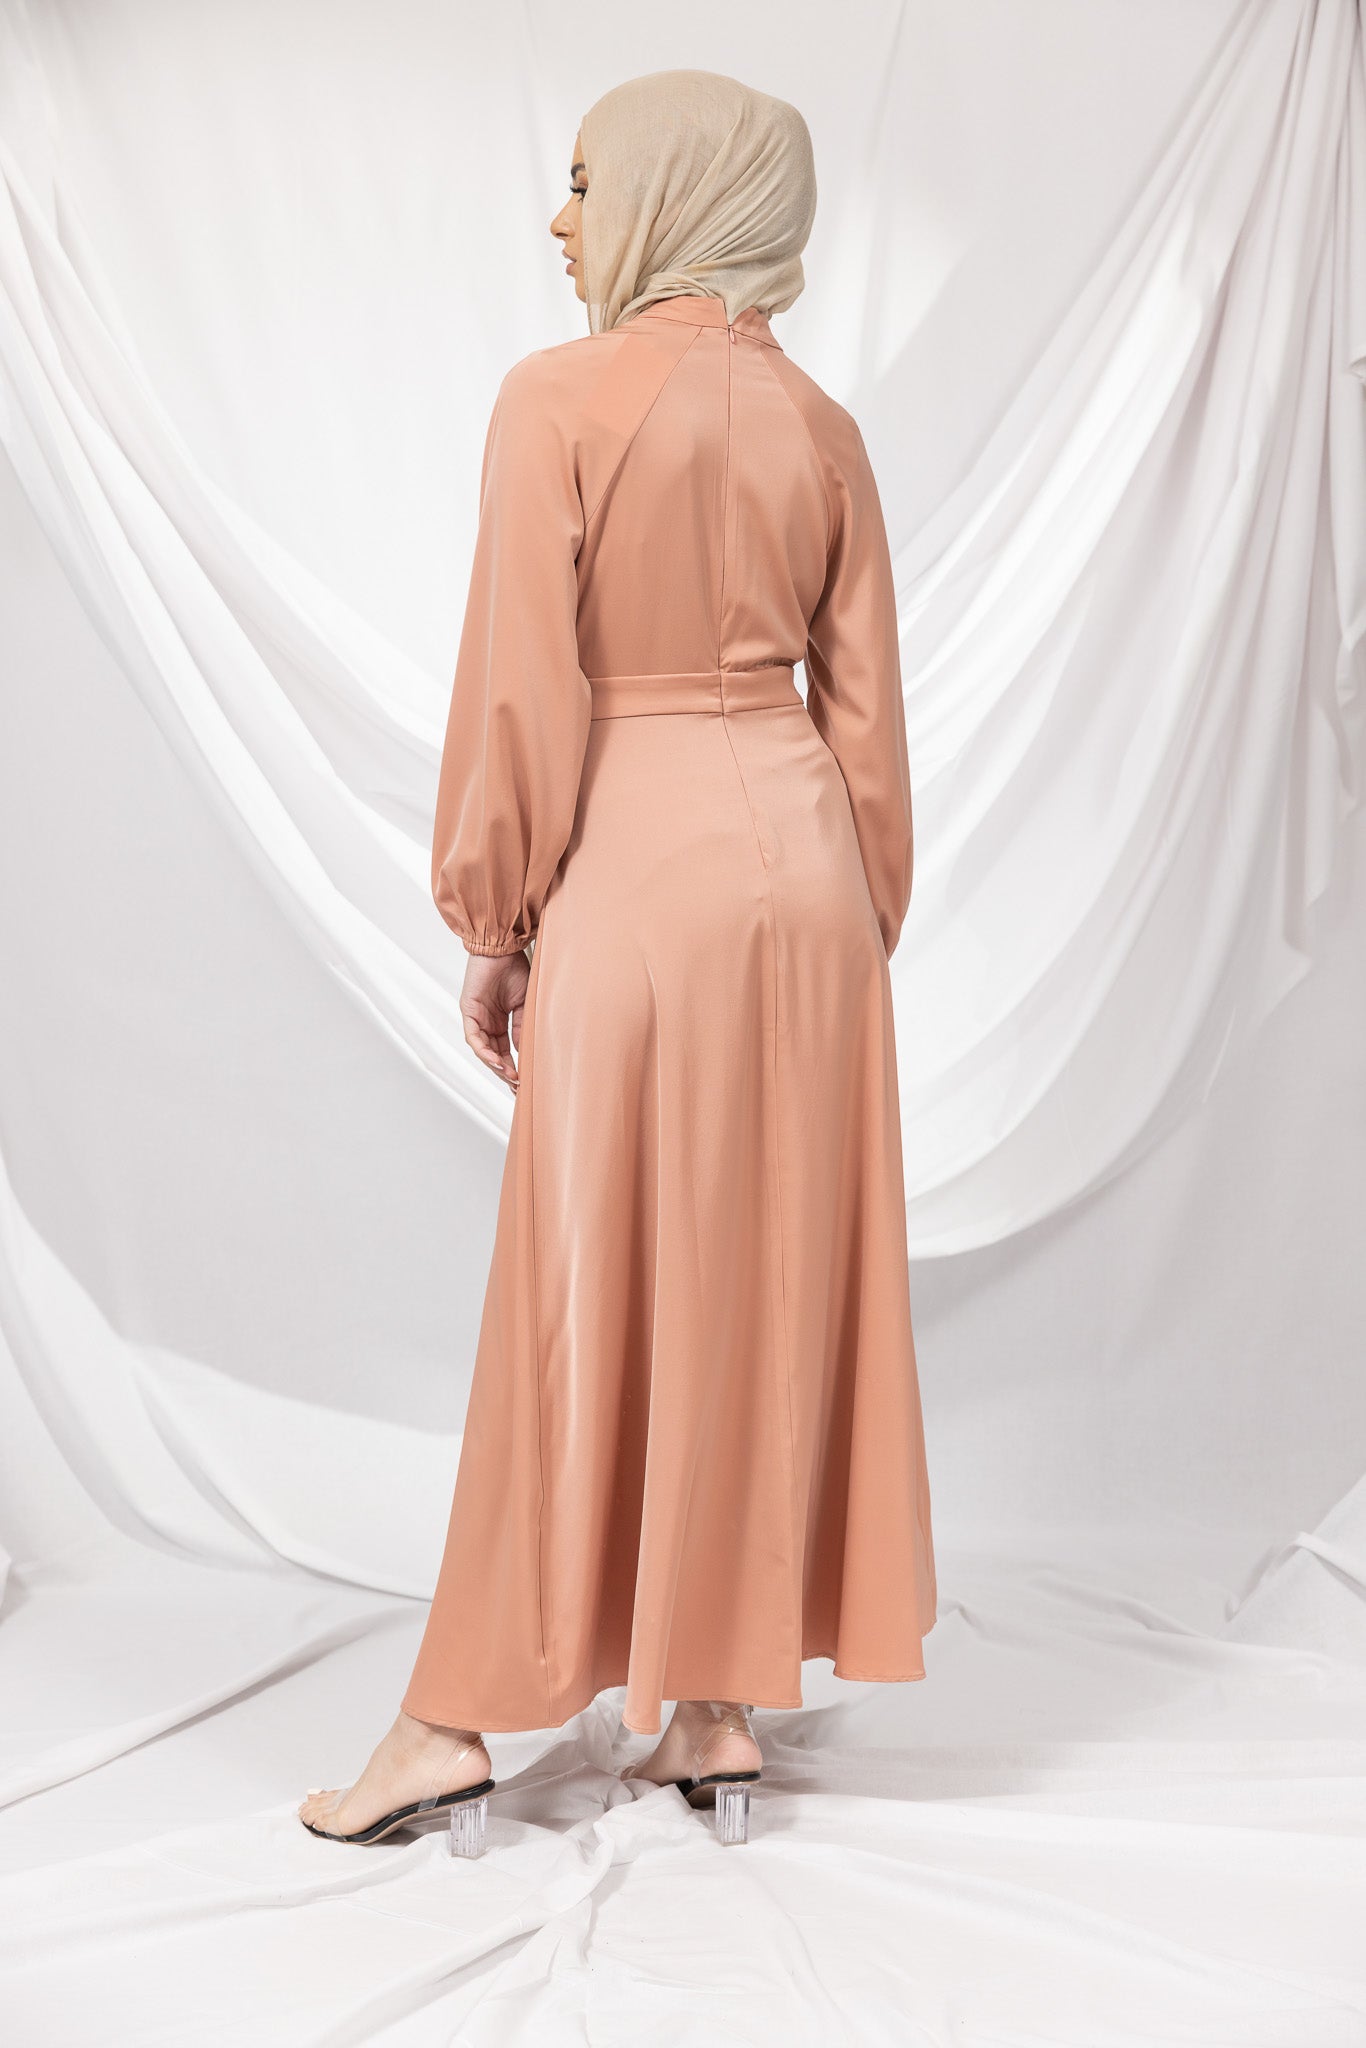 m8025Blush-dress-abaya